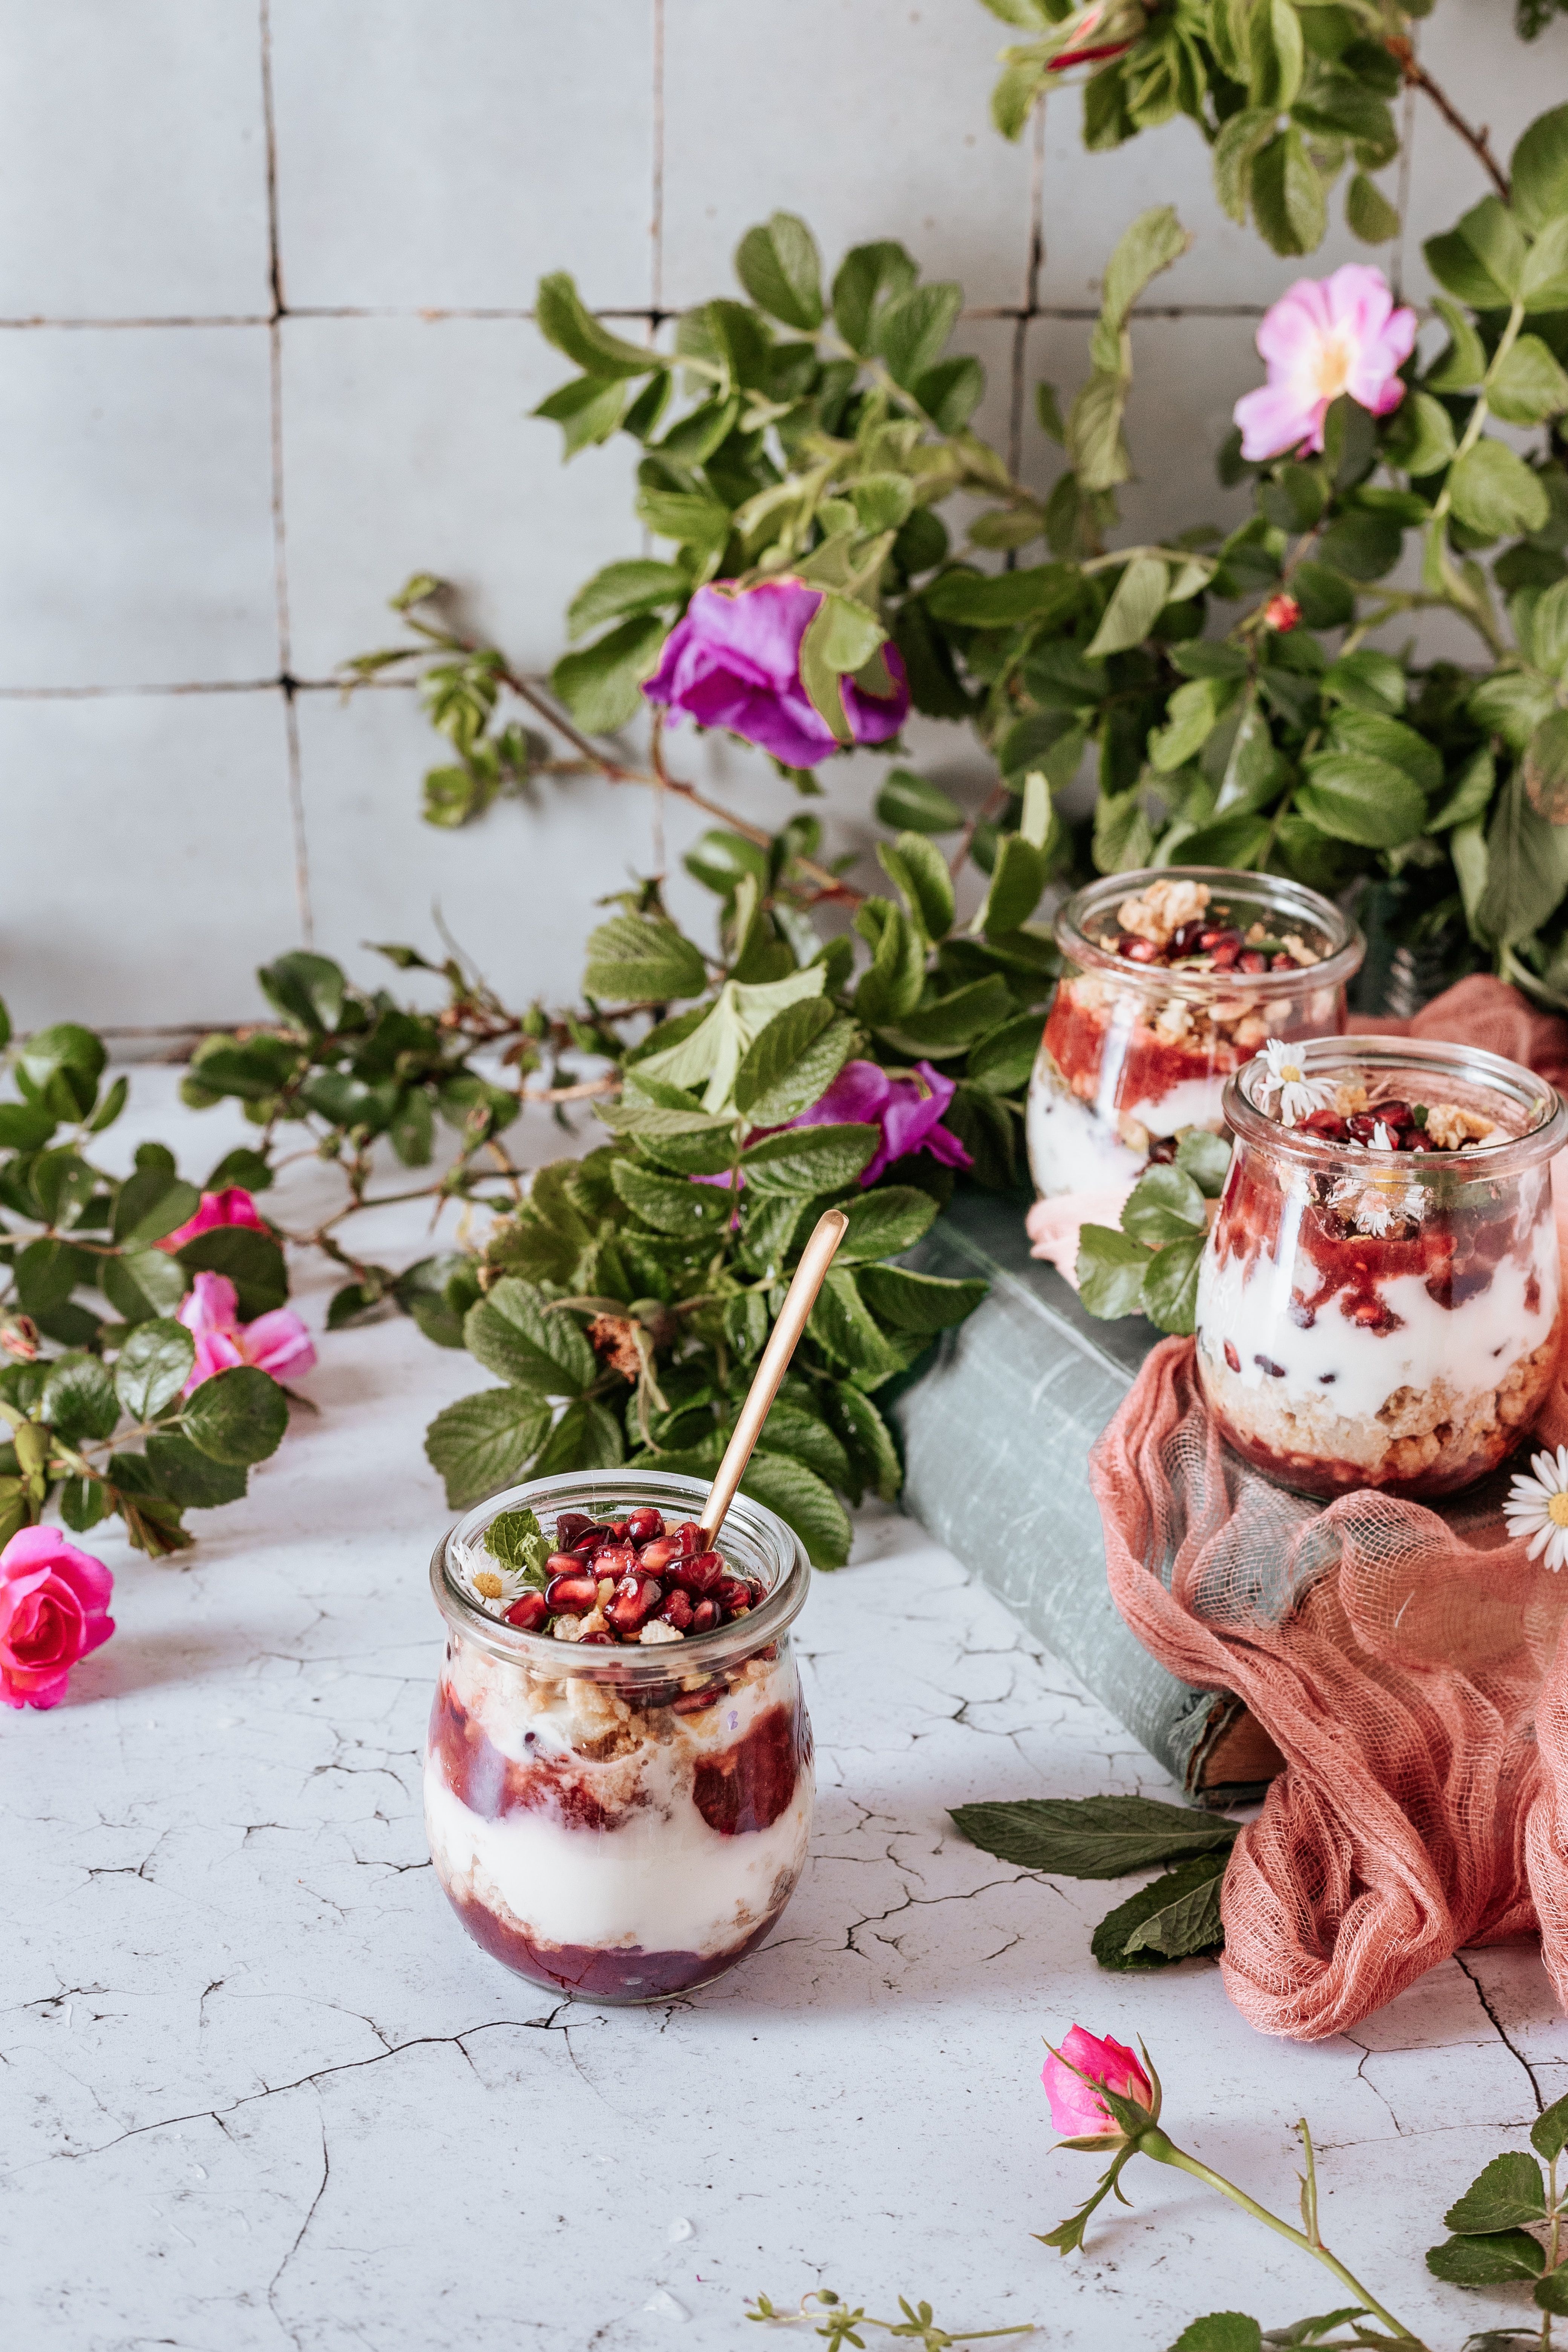 Greek Yogurt Parfait with Berries